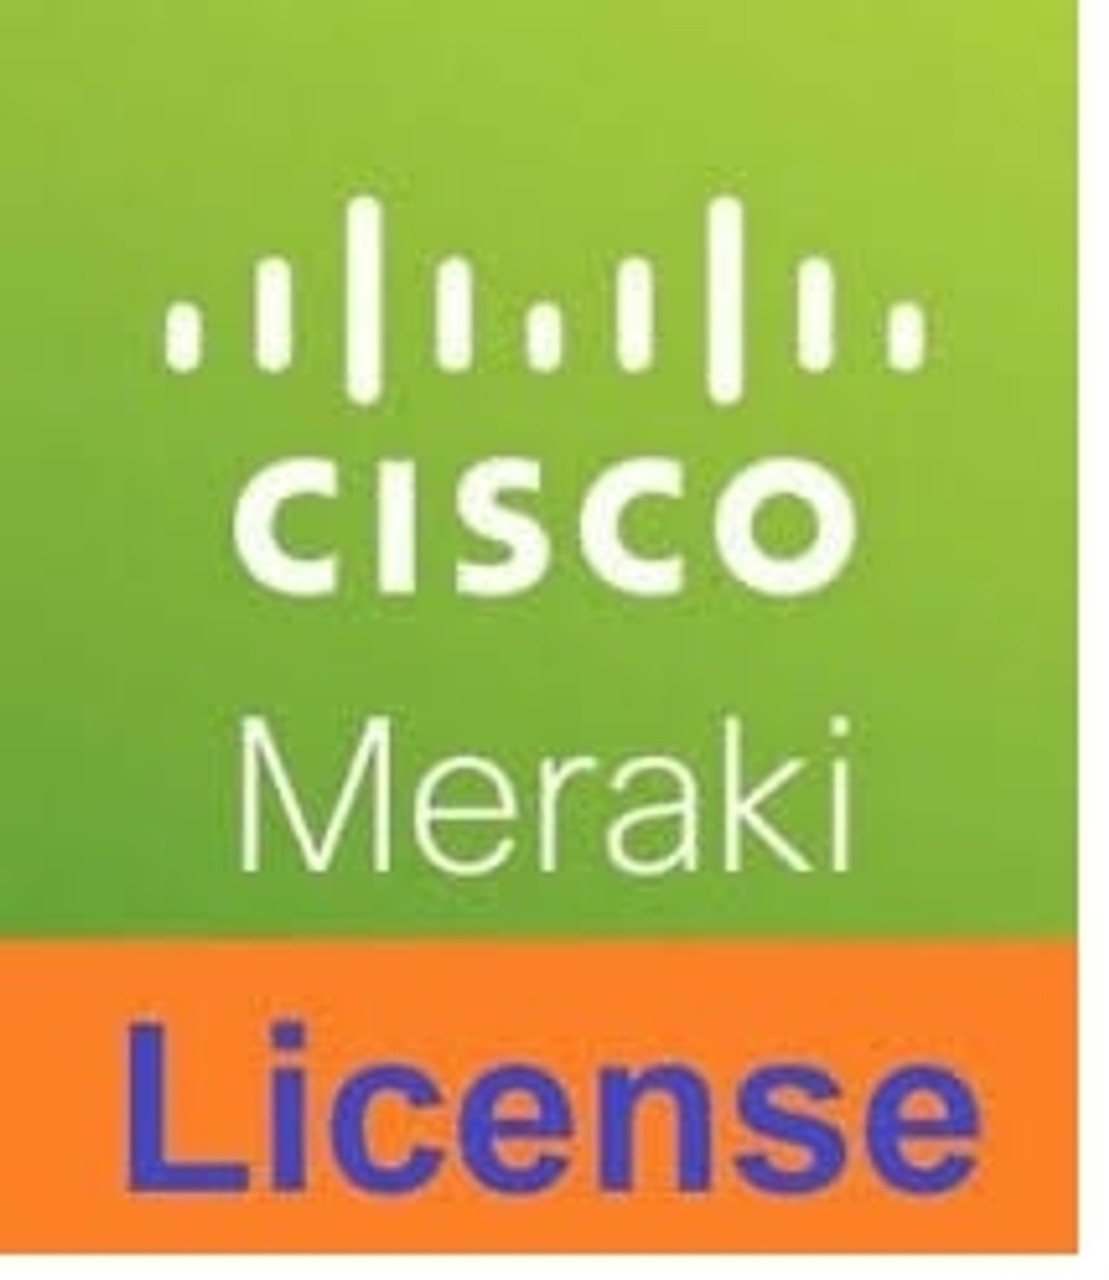 Meraki MS125-48 Enterprise License and Support, 3 Year